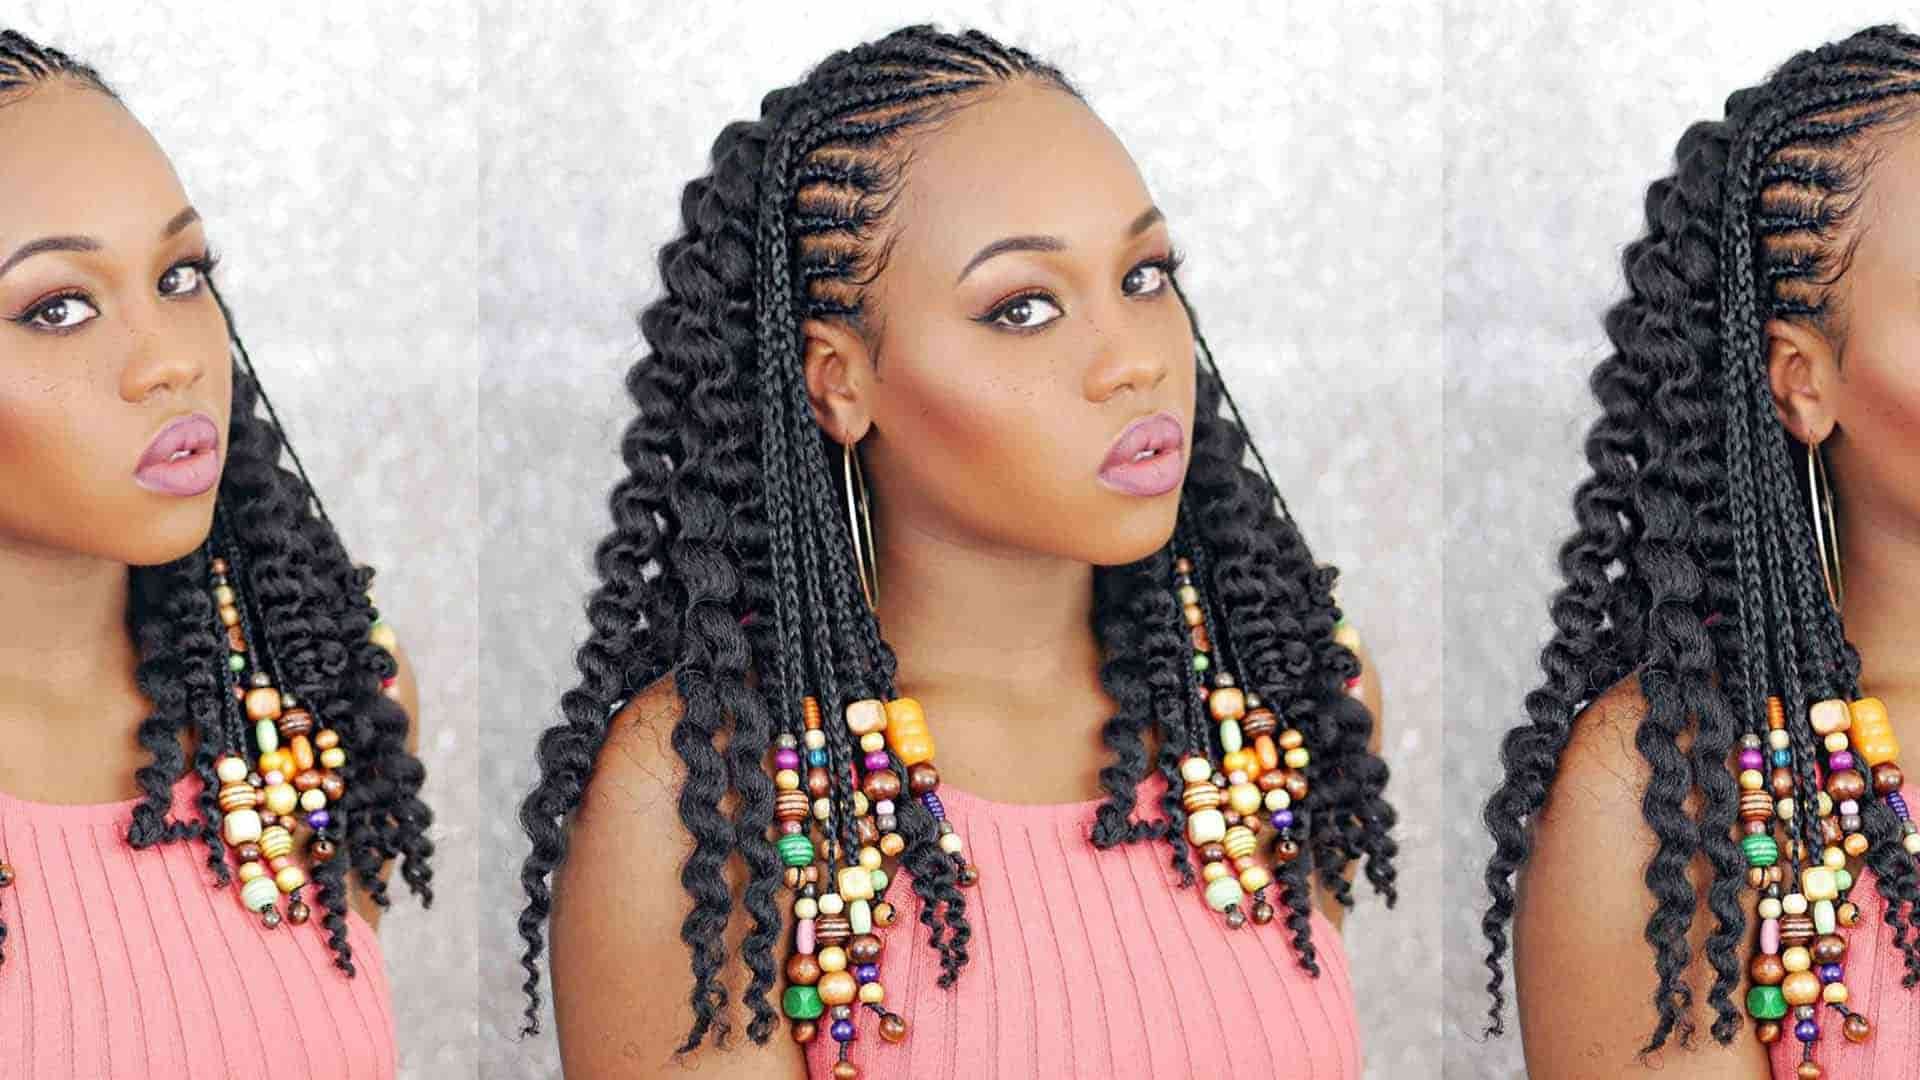 https://www.lorealparisusa.com/-/media/project/loreal/brand-sites/oap/americas/us/beauty-magazine/2021/march/3-19/fulani-braids/fulani-braid-hairstyles-2021-hero-bmag.jpg